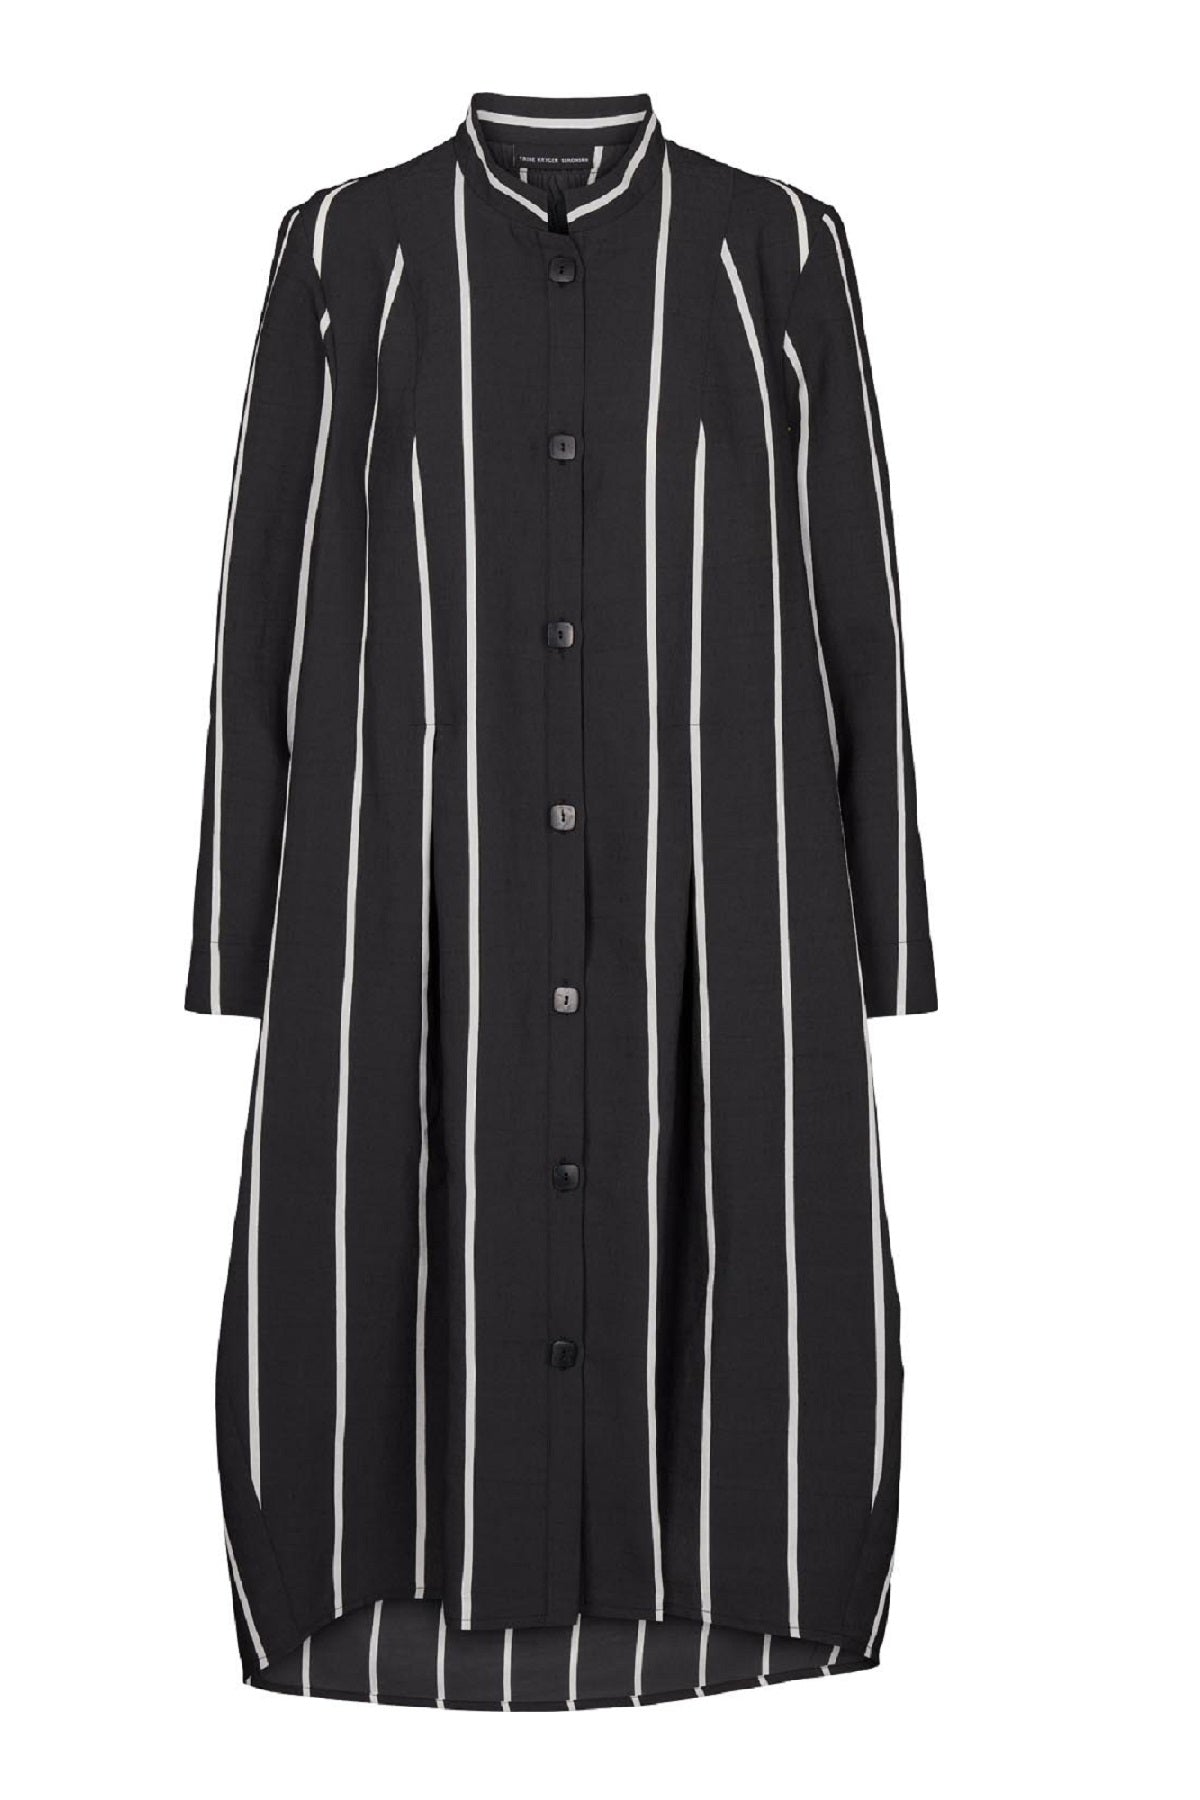 Trine Kryger Simonsen SHIRT DRESS YUKIO (502070), Black